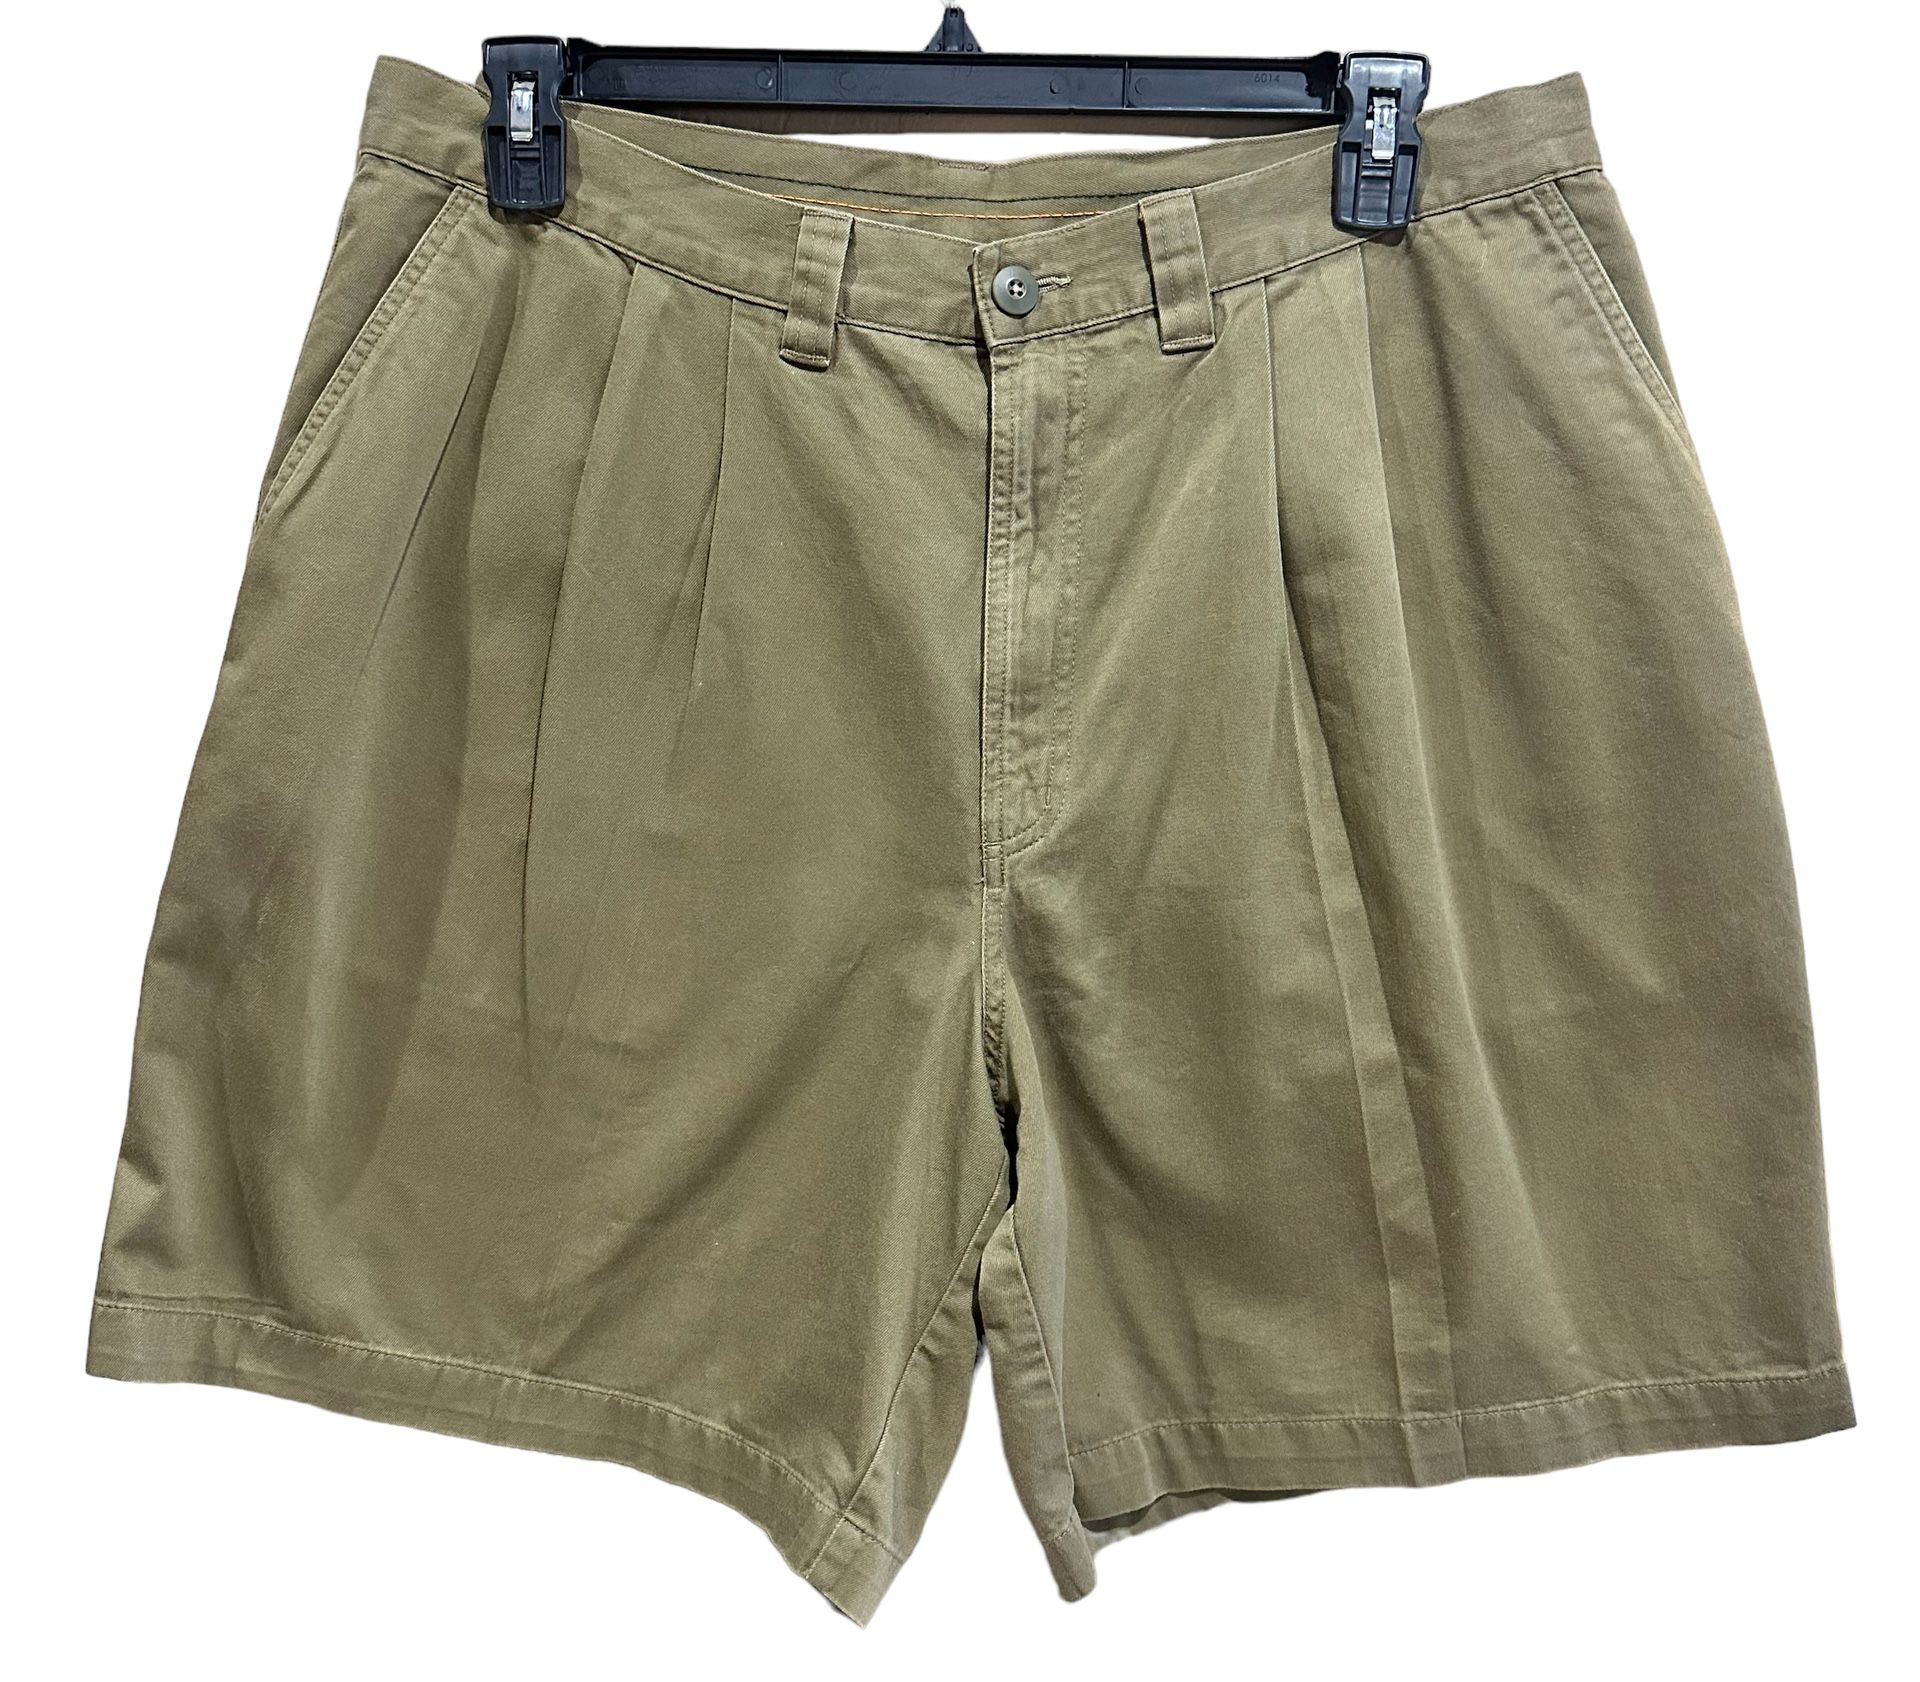 NWOT Patagonia Green Shorts Men’s Size 38 Outdoor Hiking Fishing Camping Pockets